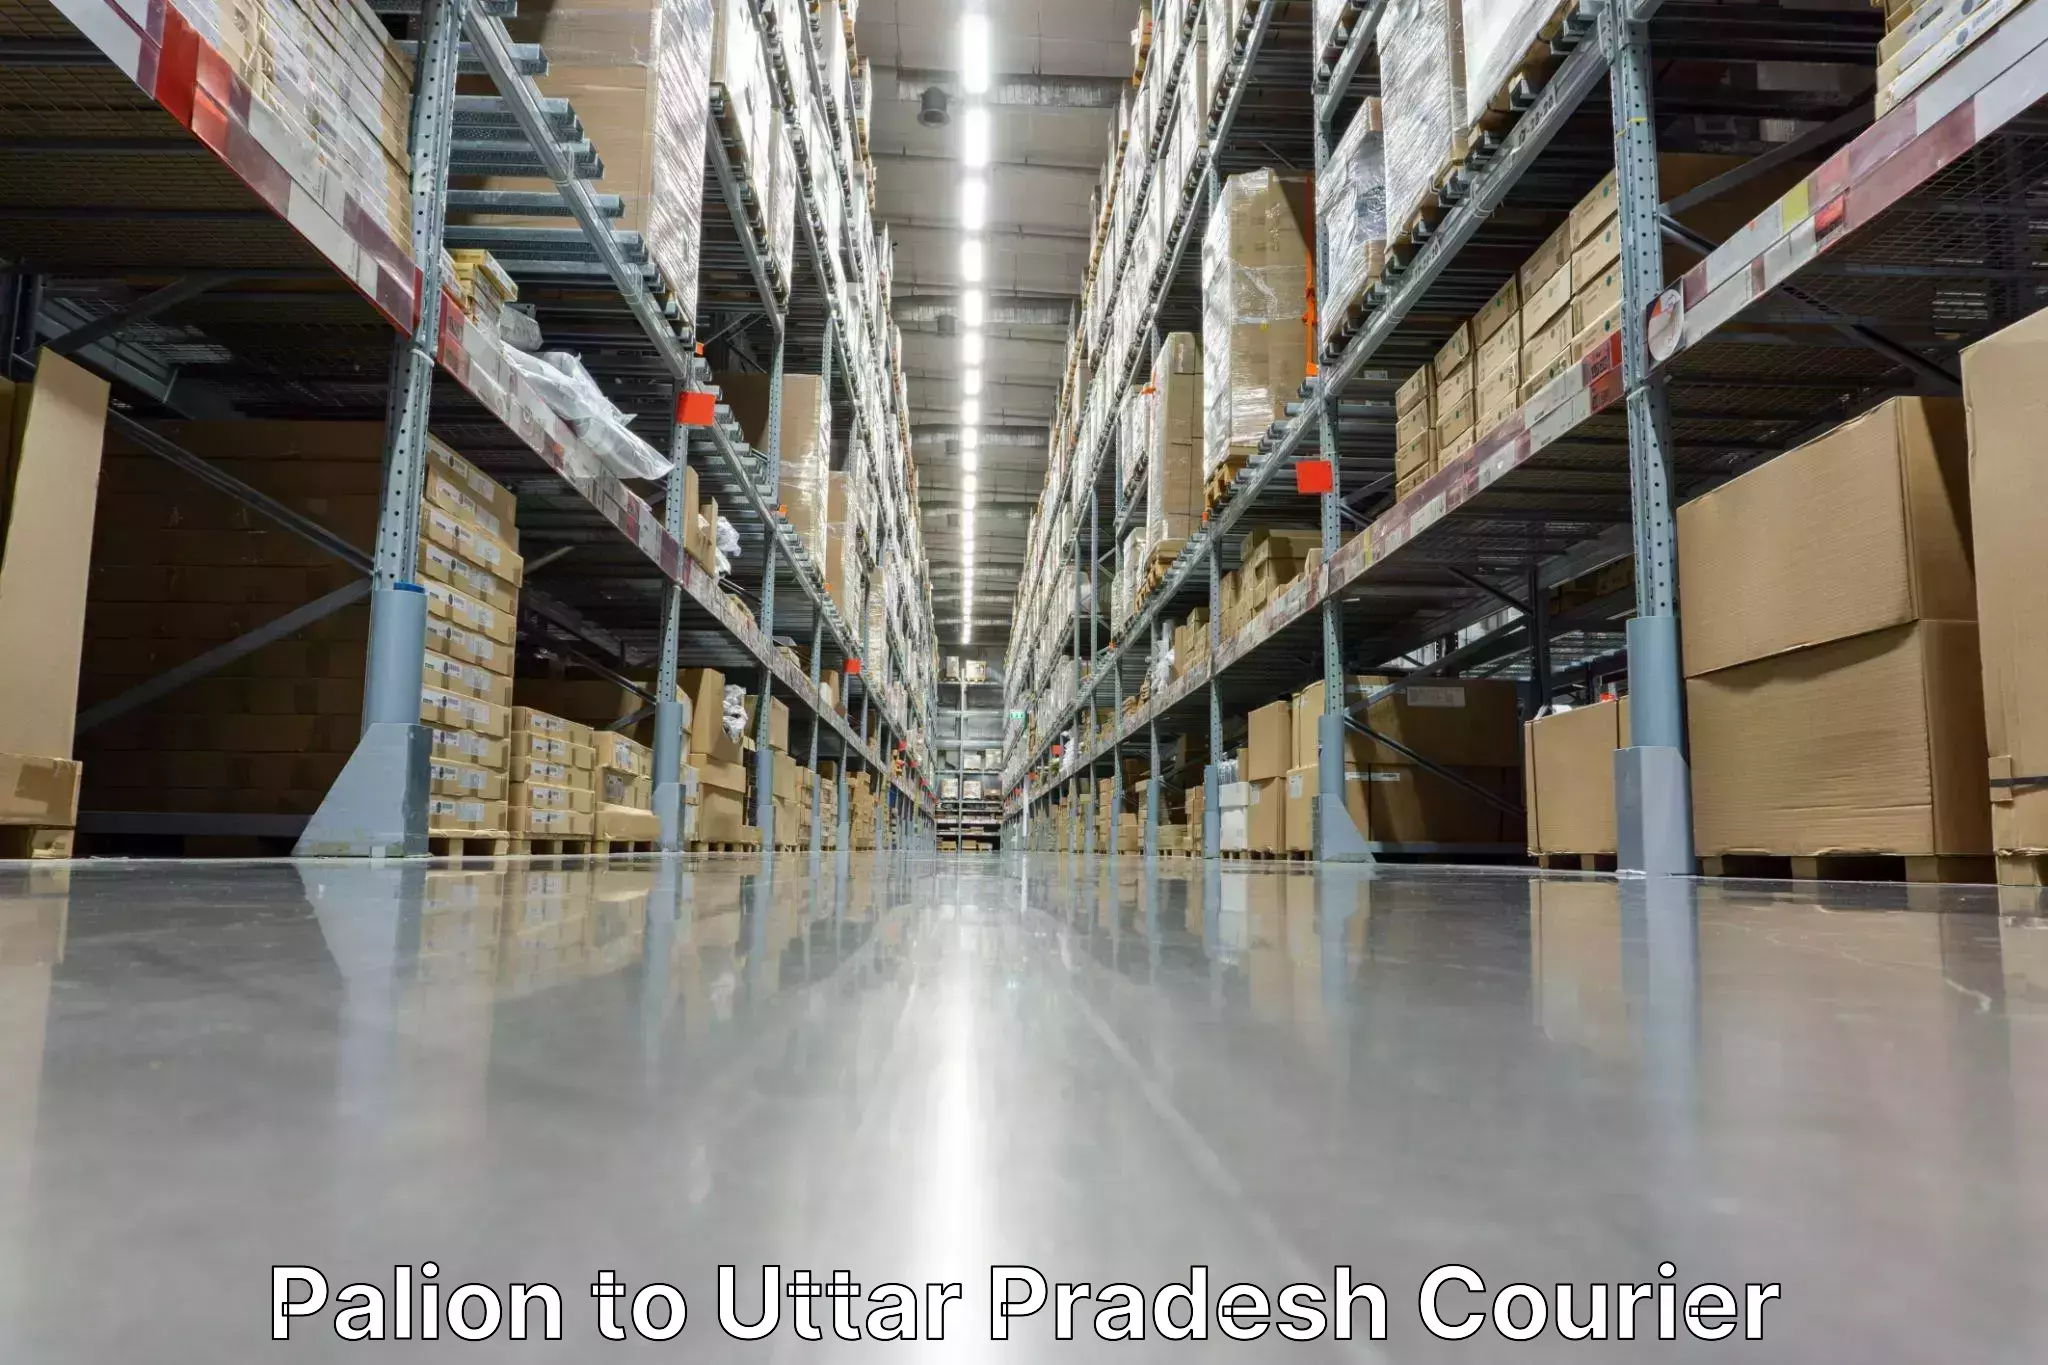 Courier app Palion to Uttar Pradesh